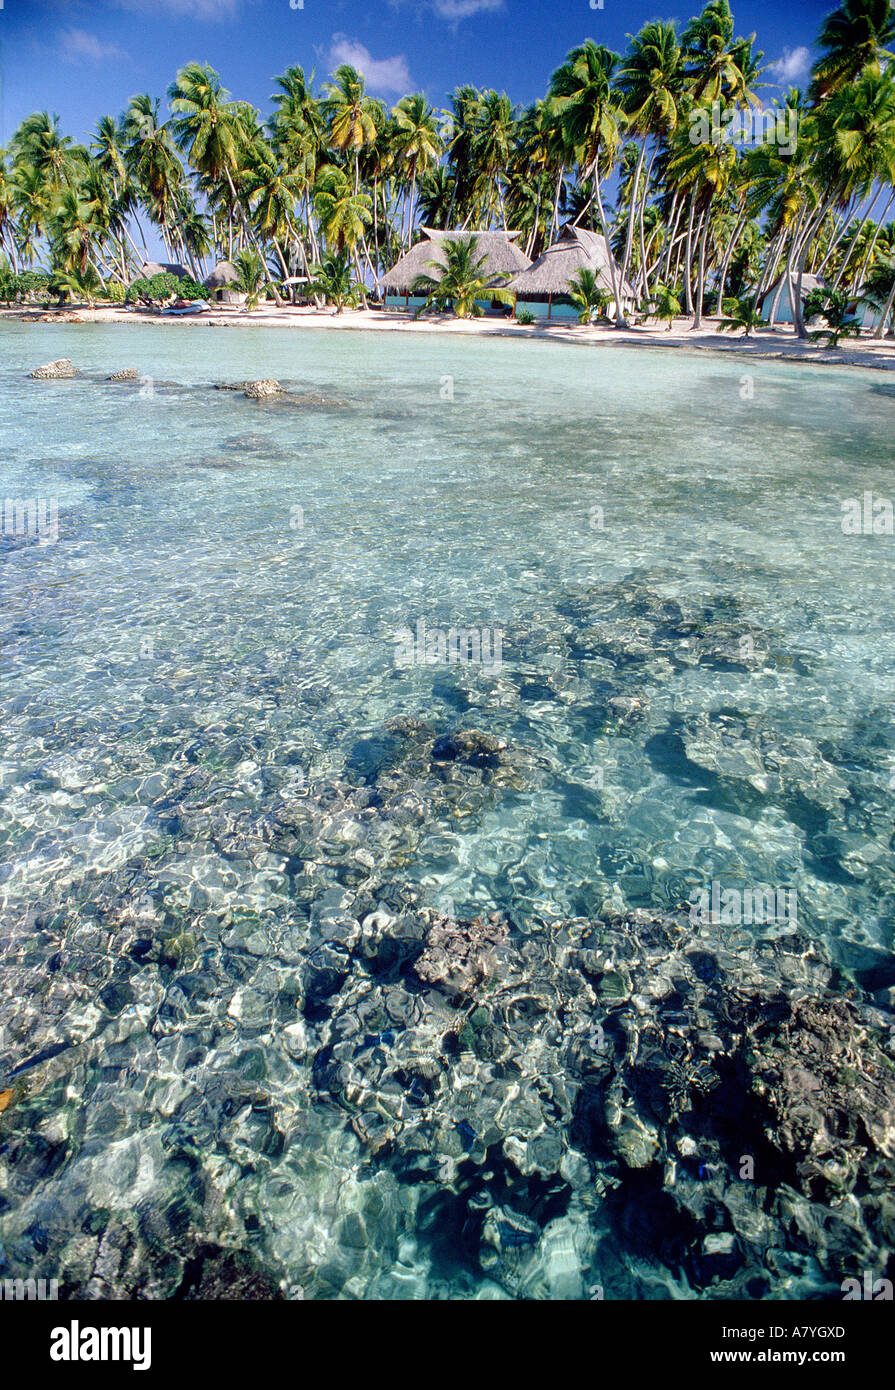 Francia, Polinesia francese, Manihi atoll, isolotto (motu) in laguna Foto Stock